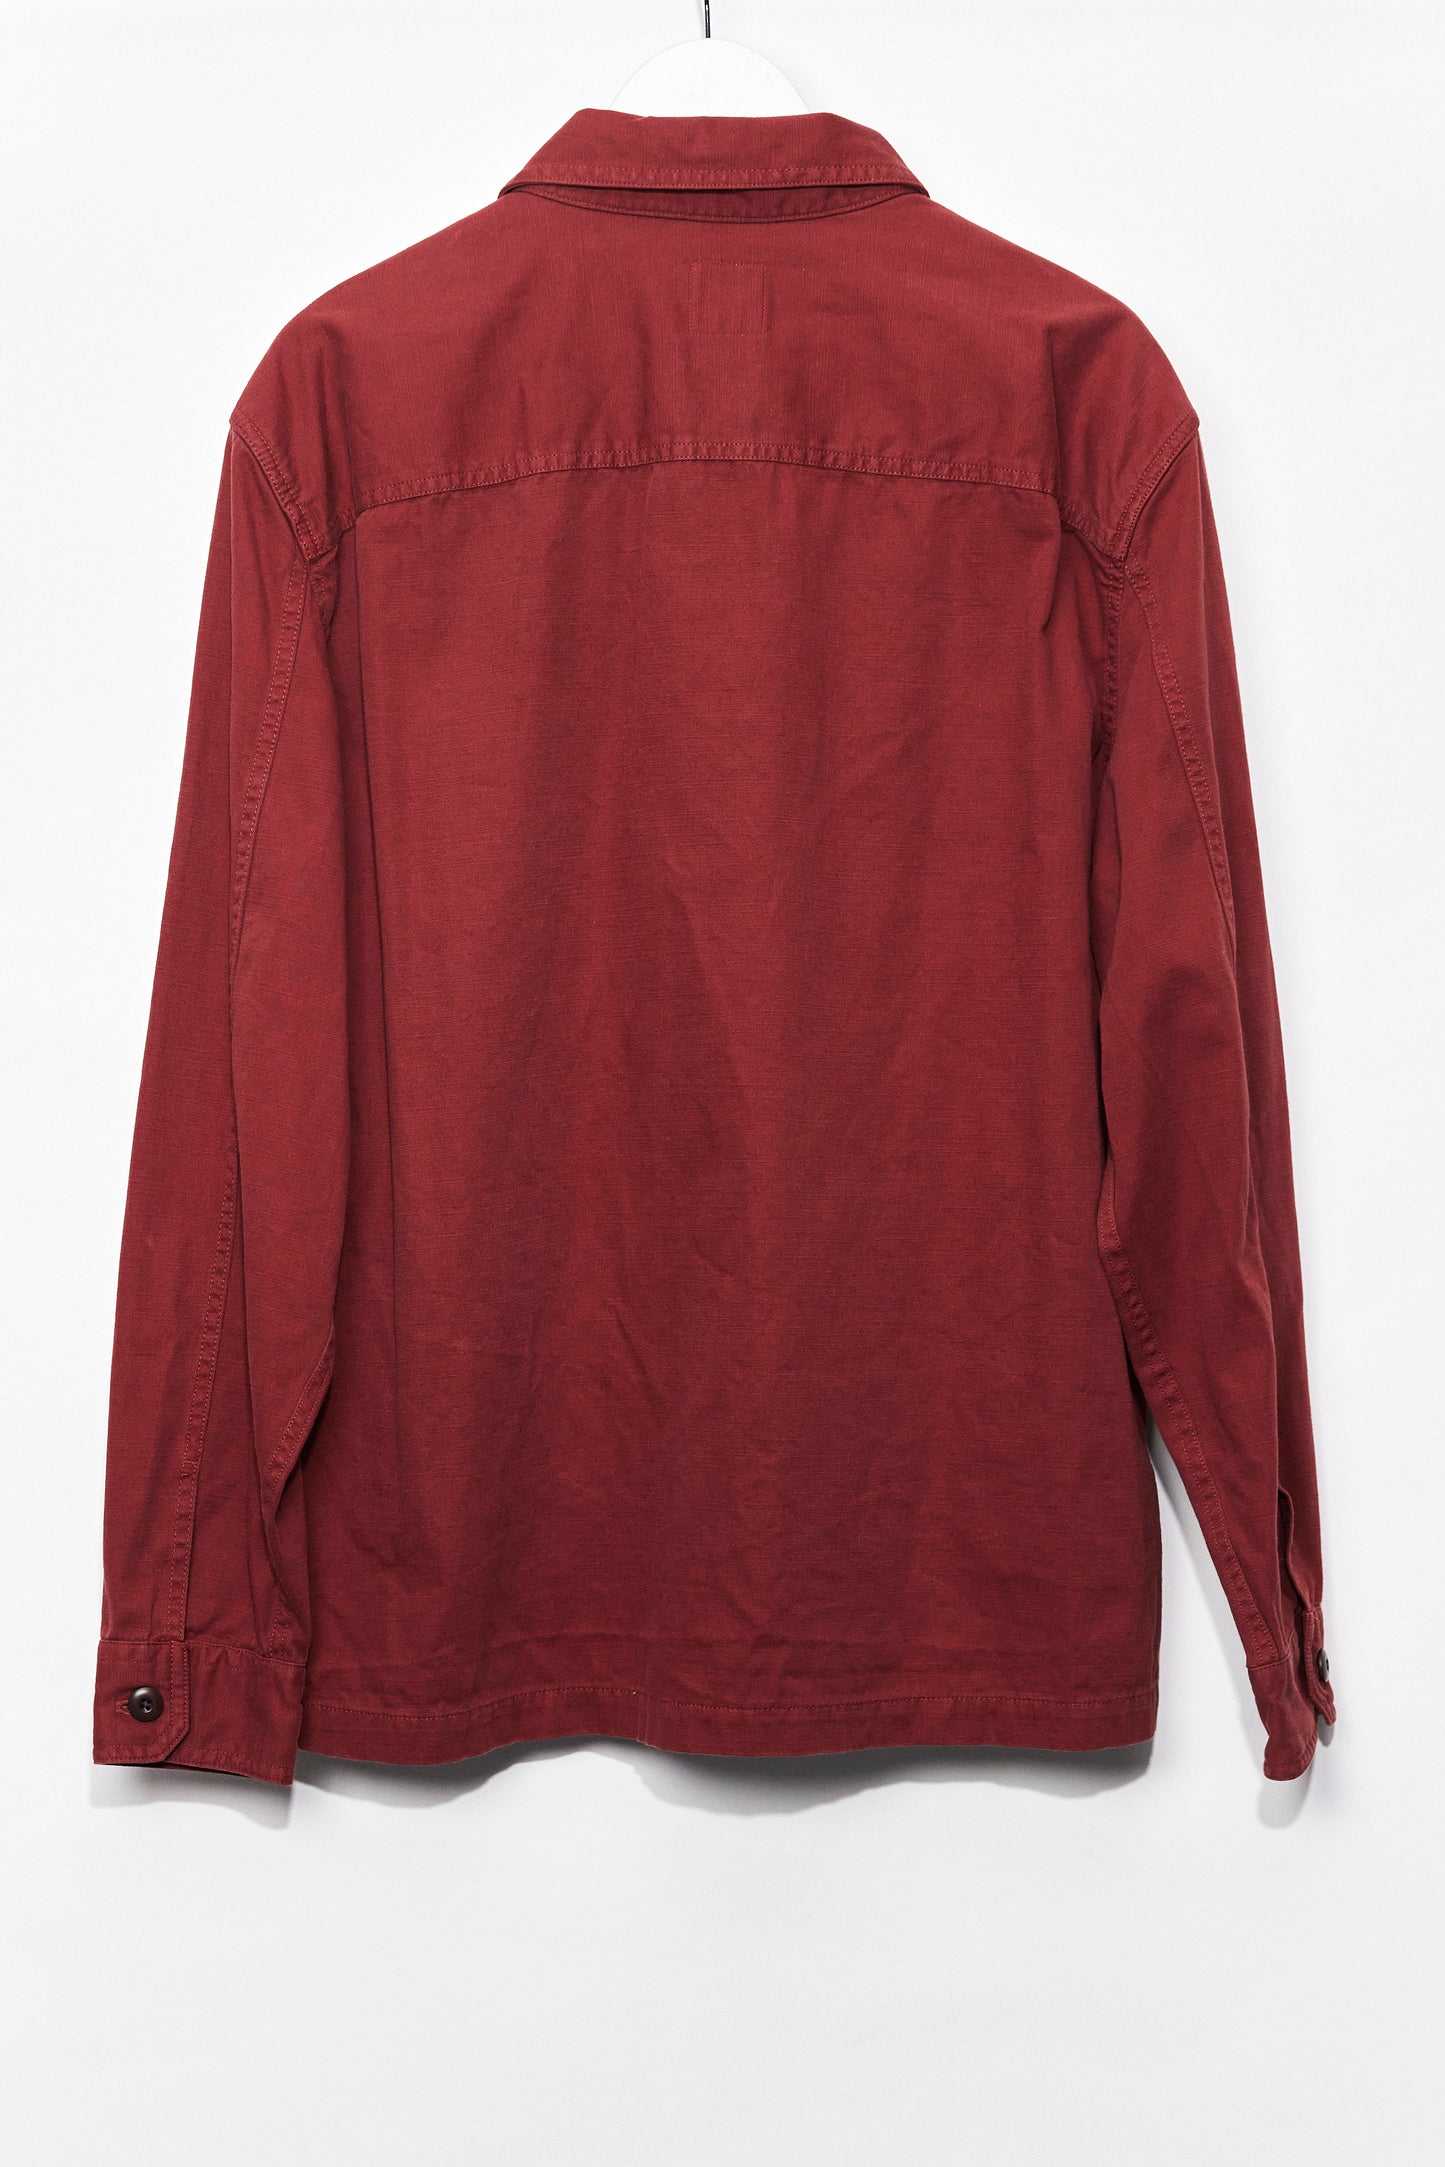 Mens Marks & Spencer Red Chore Jacket size Extra Large